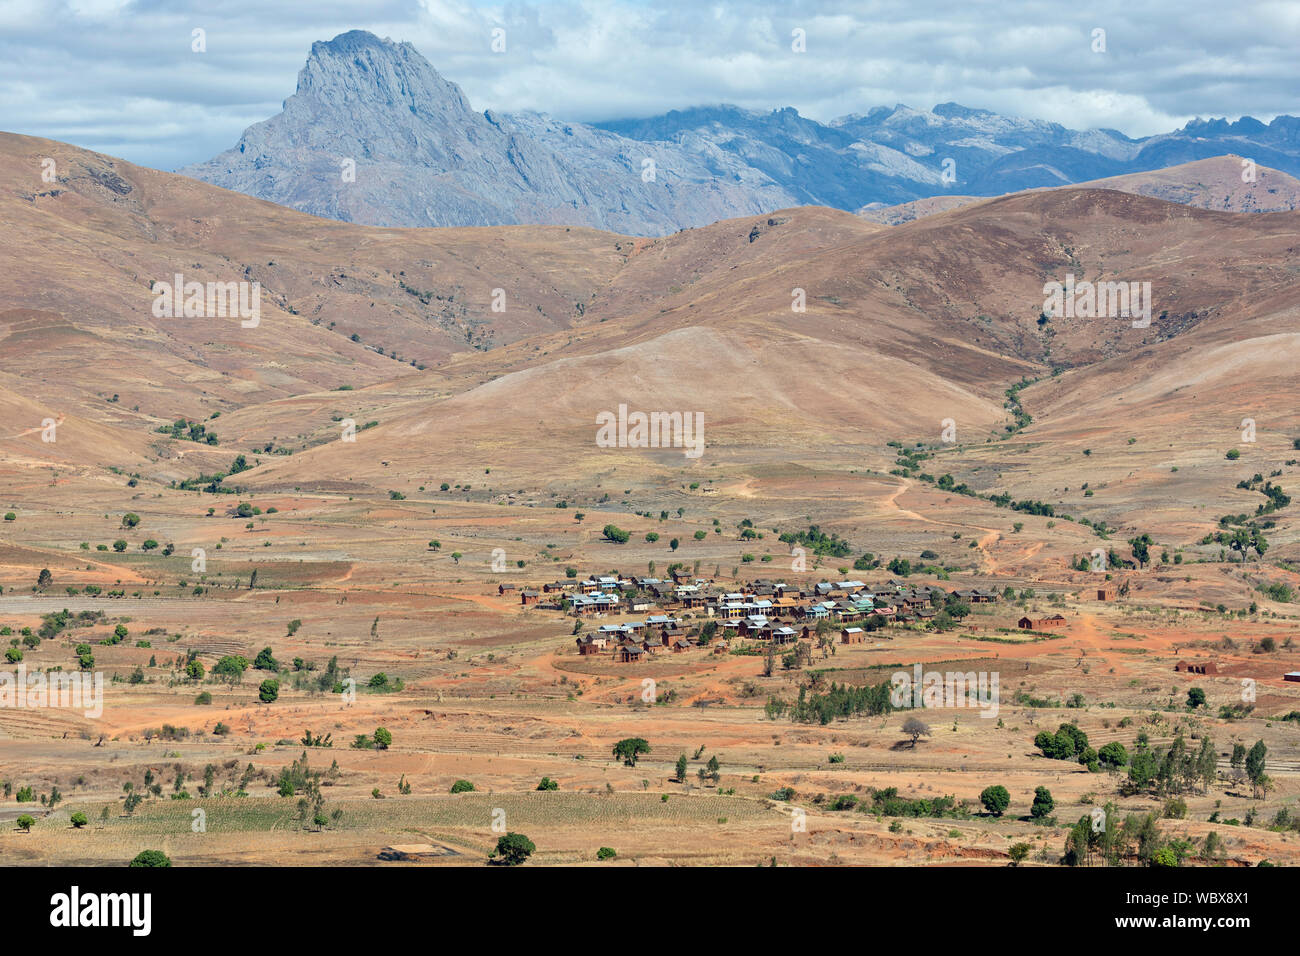 Central Madagascar, illustrating land clearance and habitat destruction on a massive scale. Stock Photo